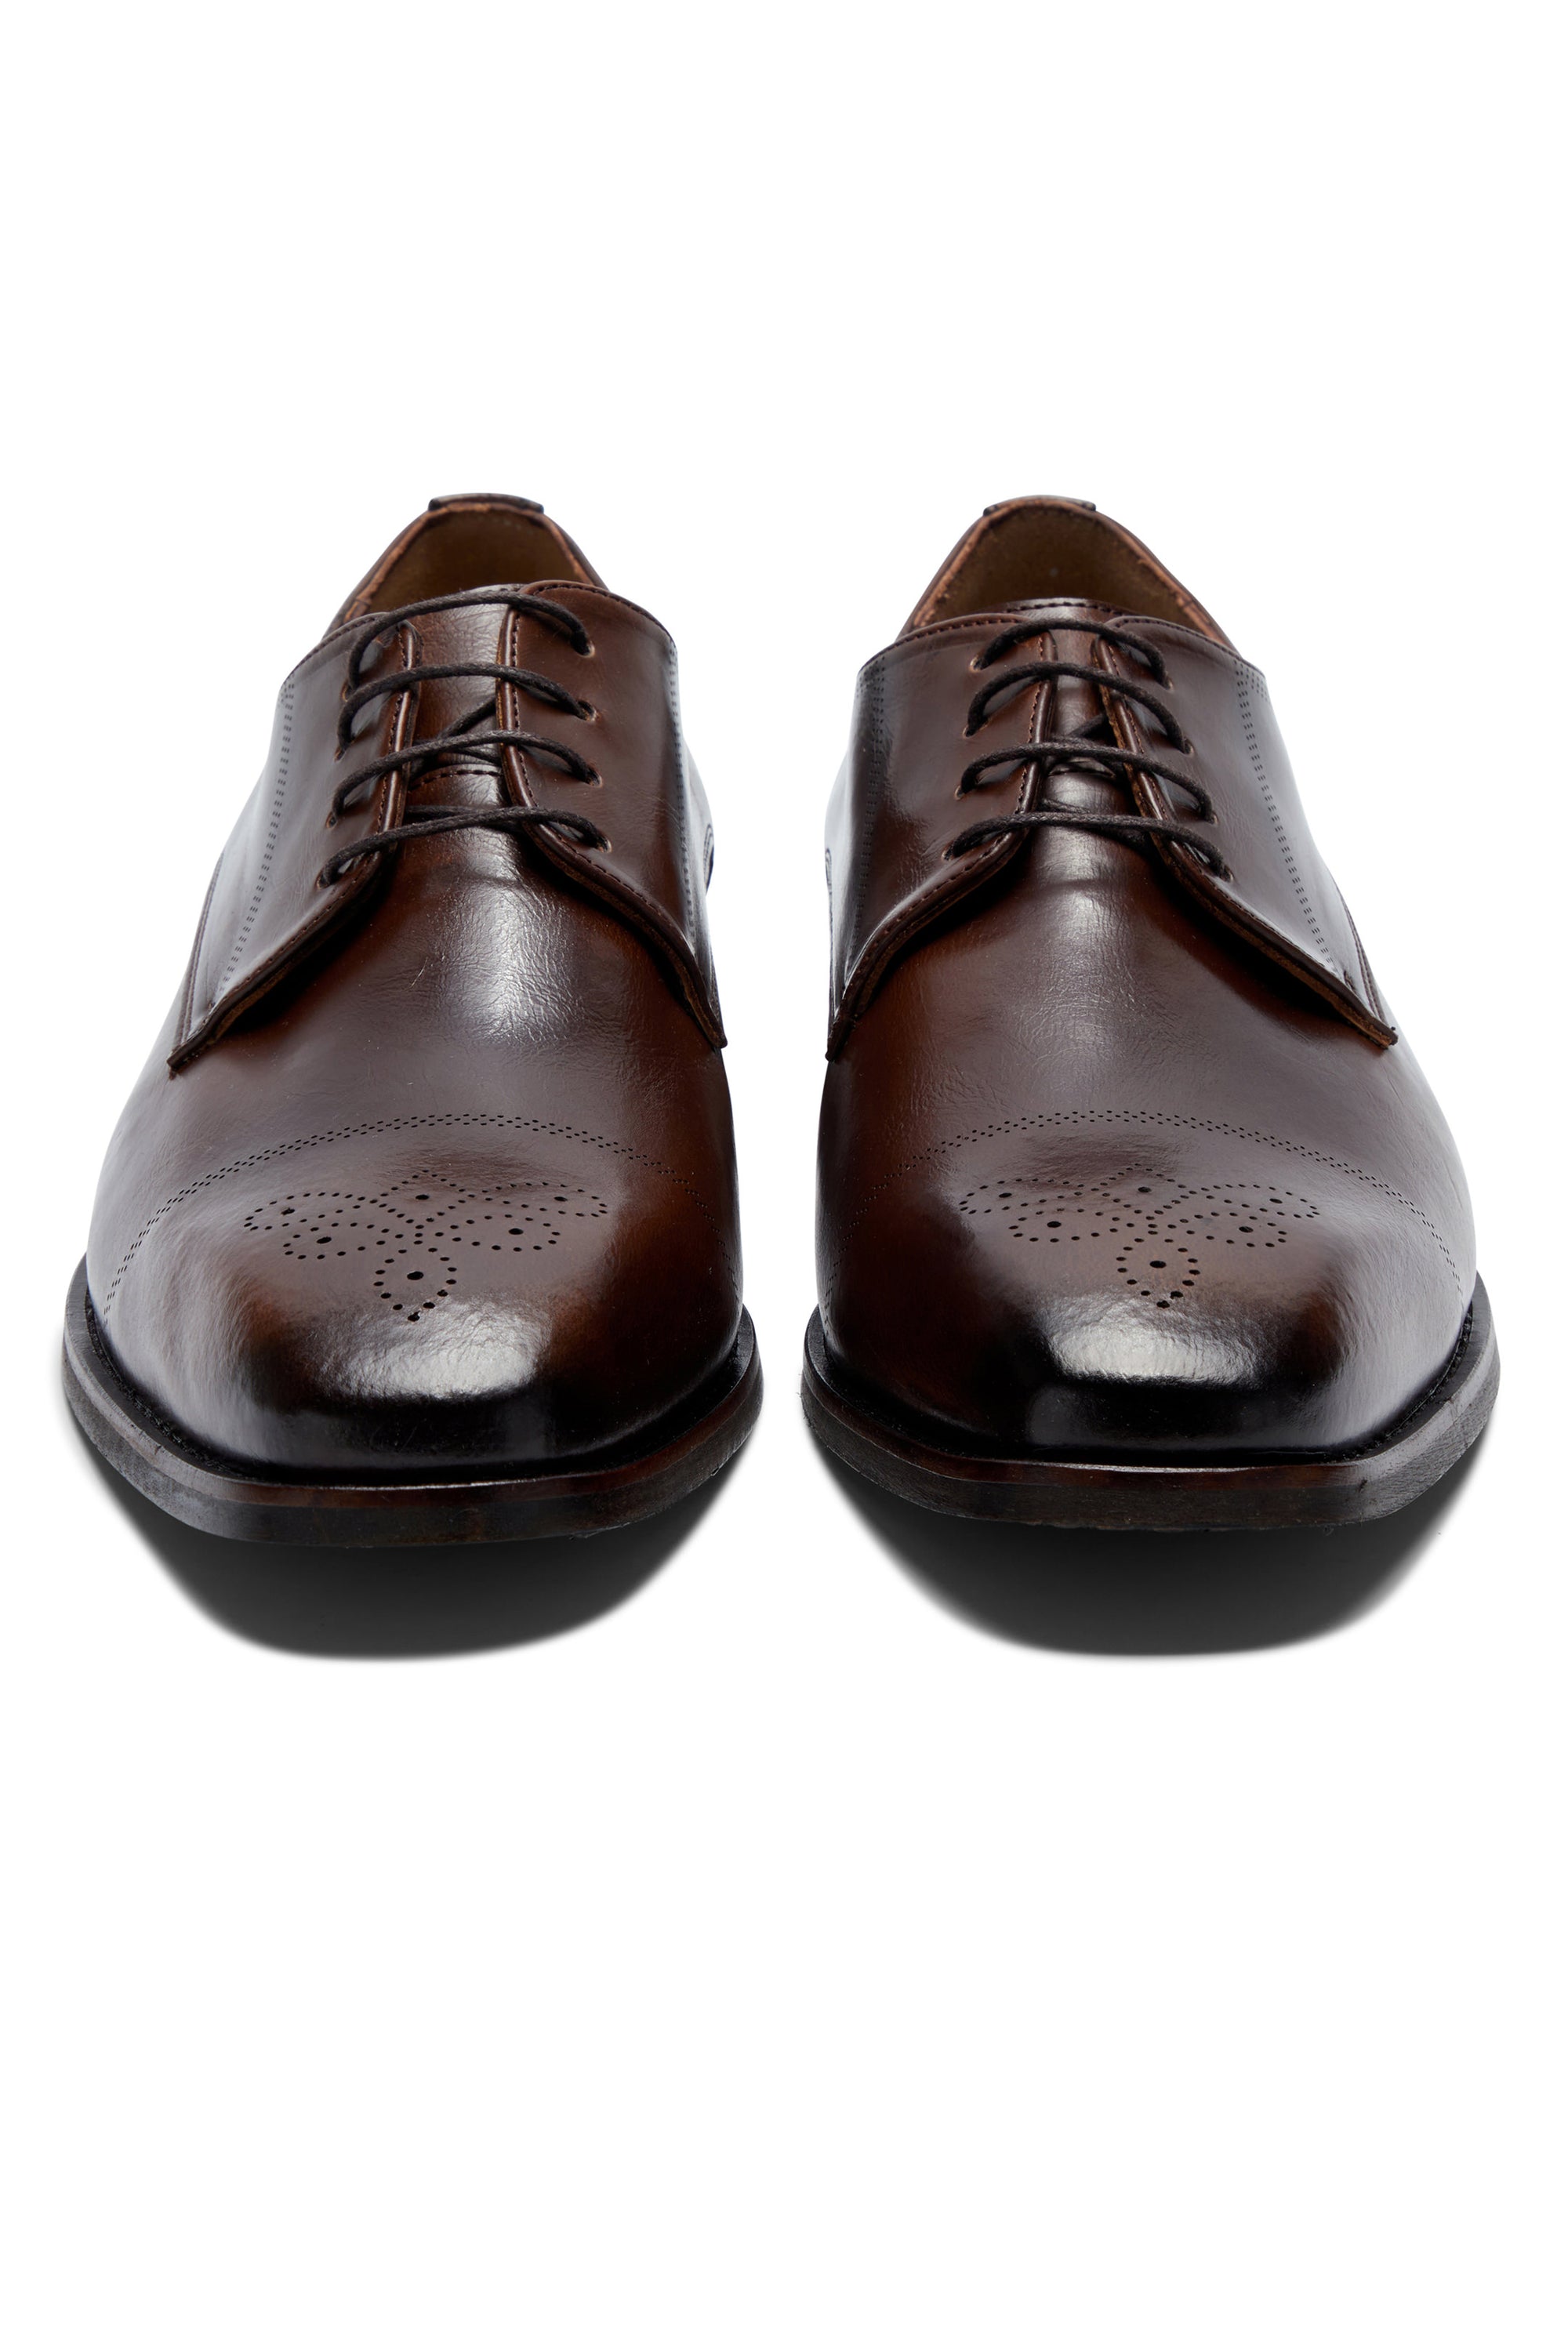 Louis Cognac Formal Mens Shoe